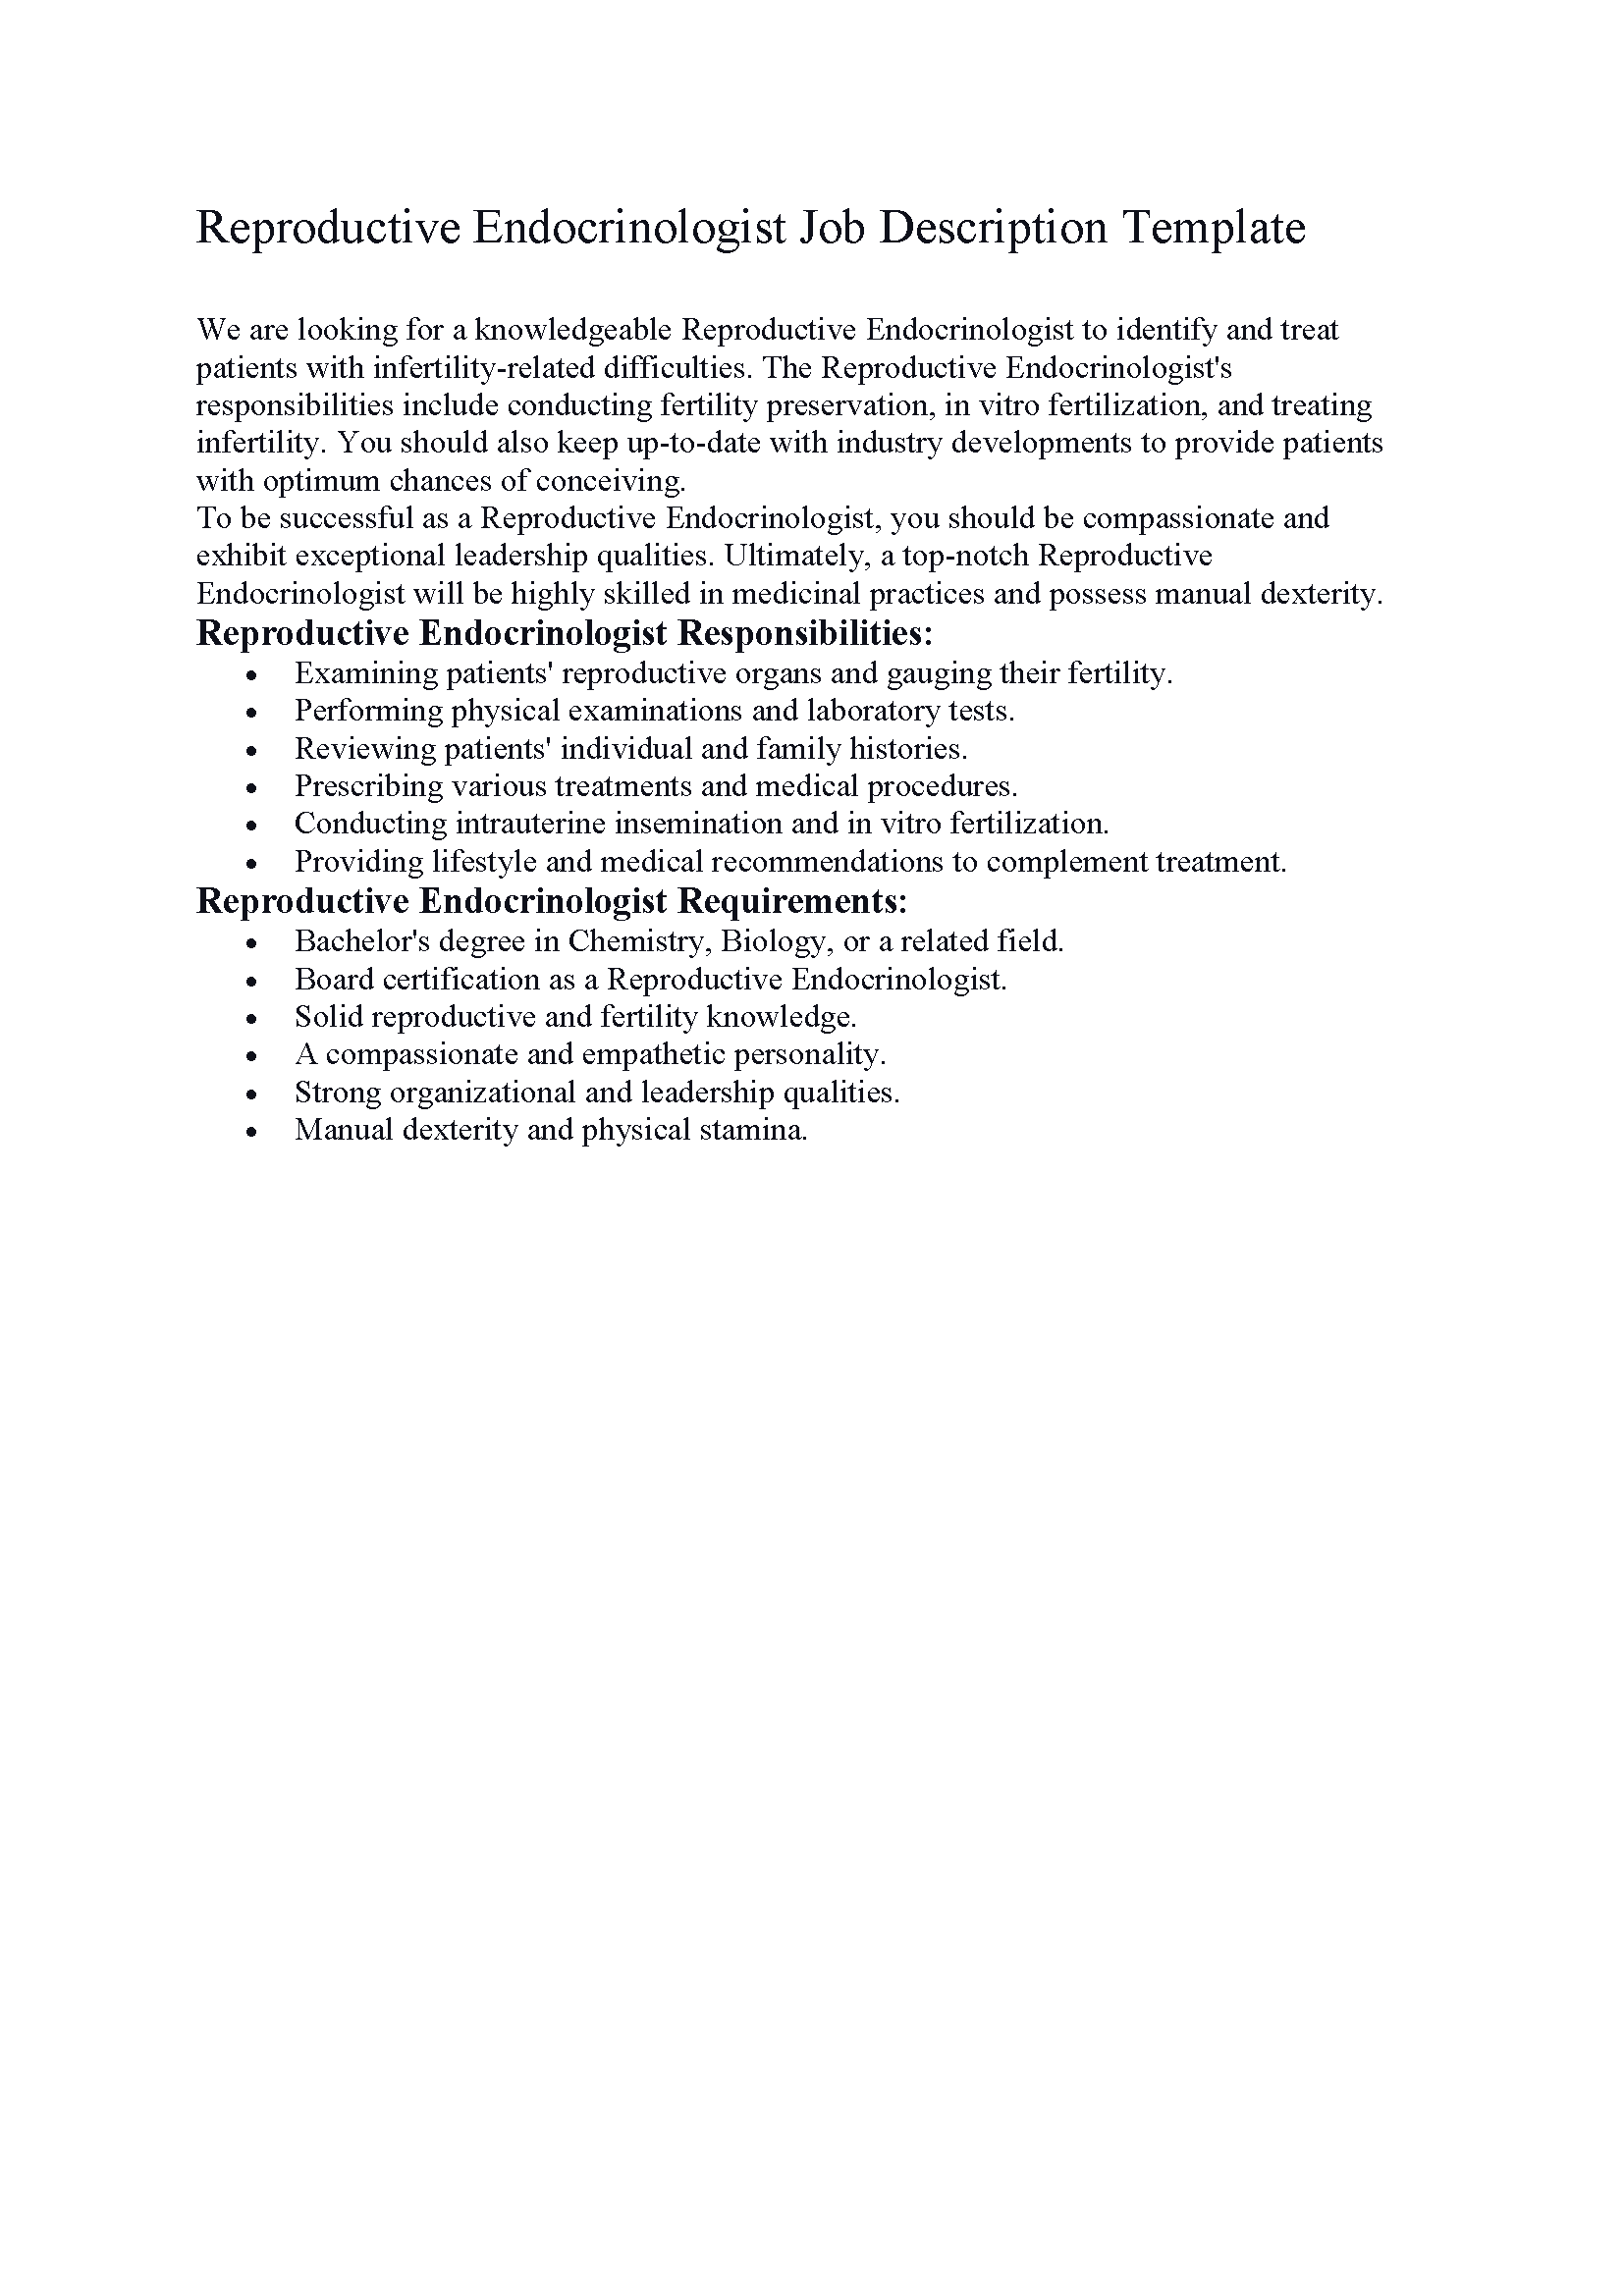 Reproductive Endocrinologist Job Description Template